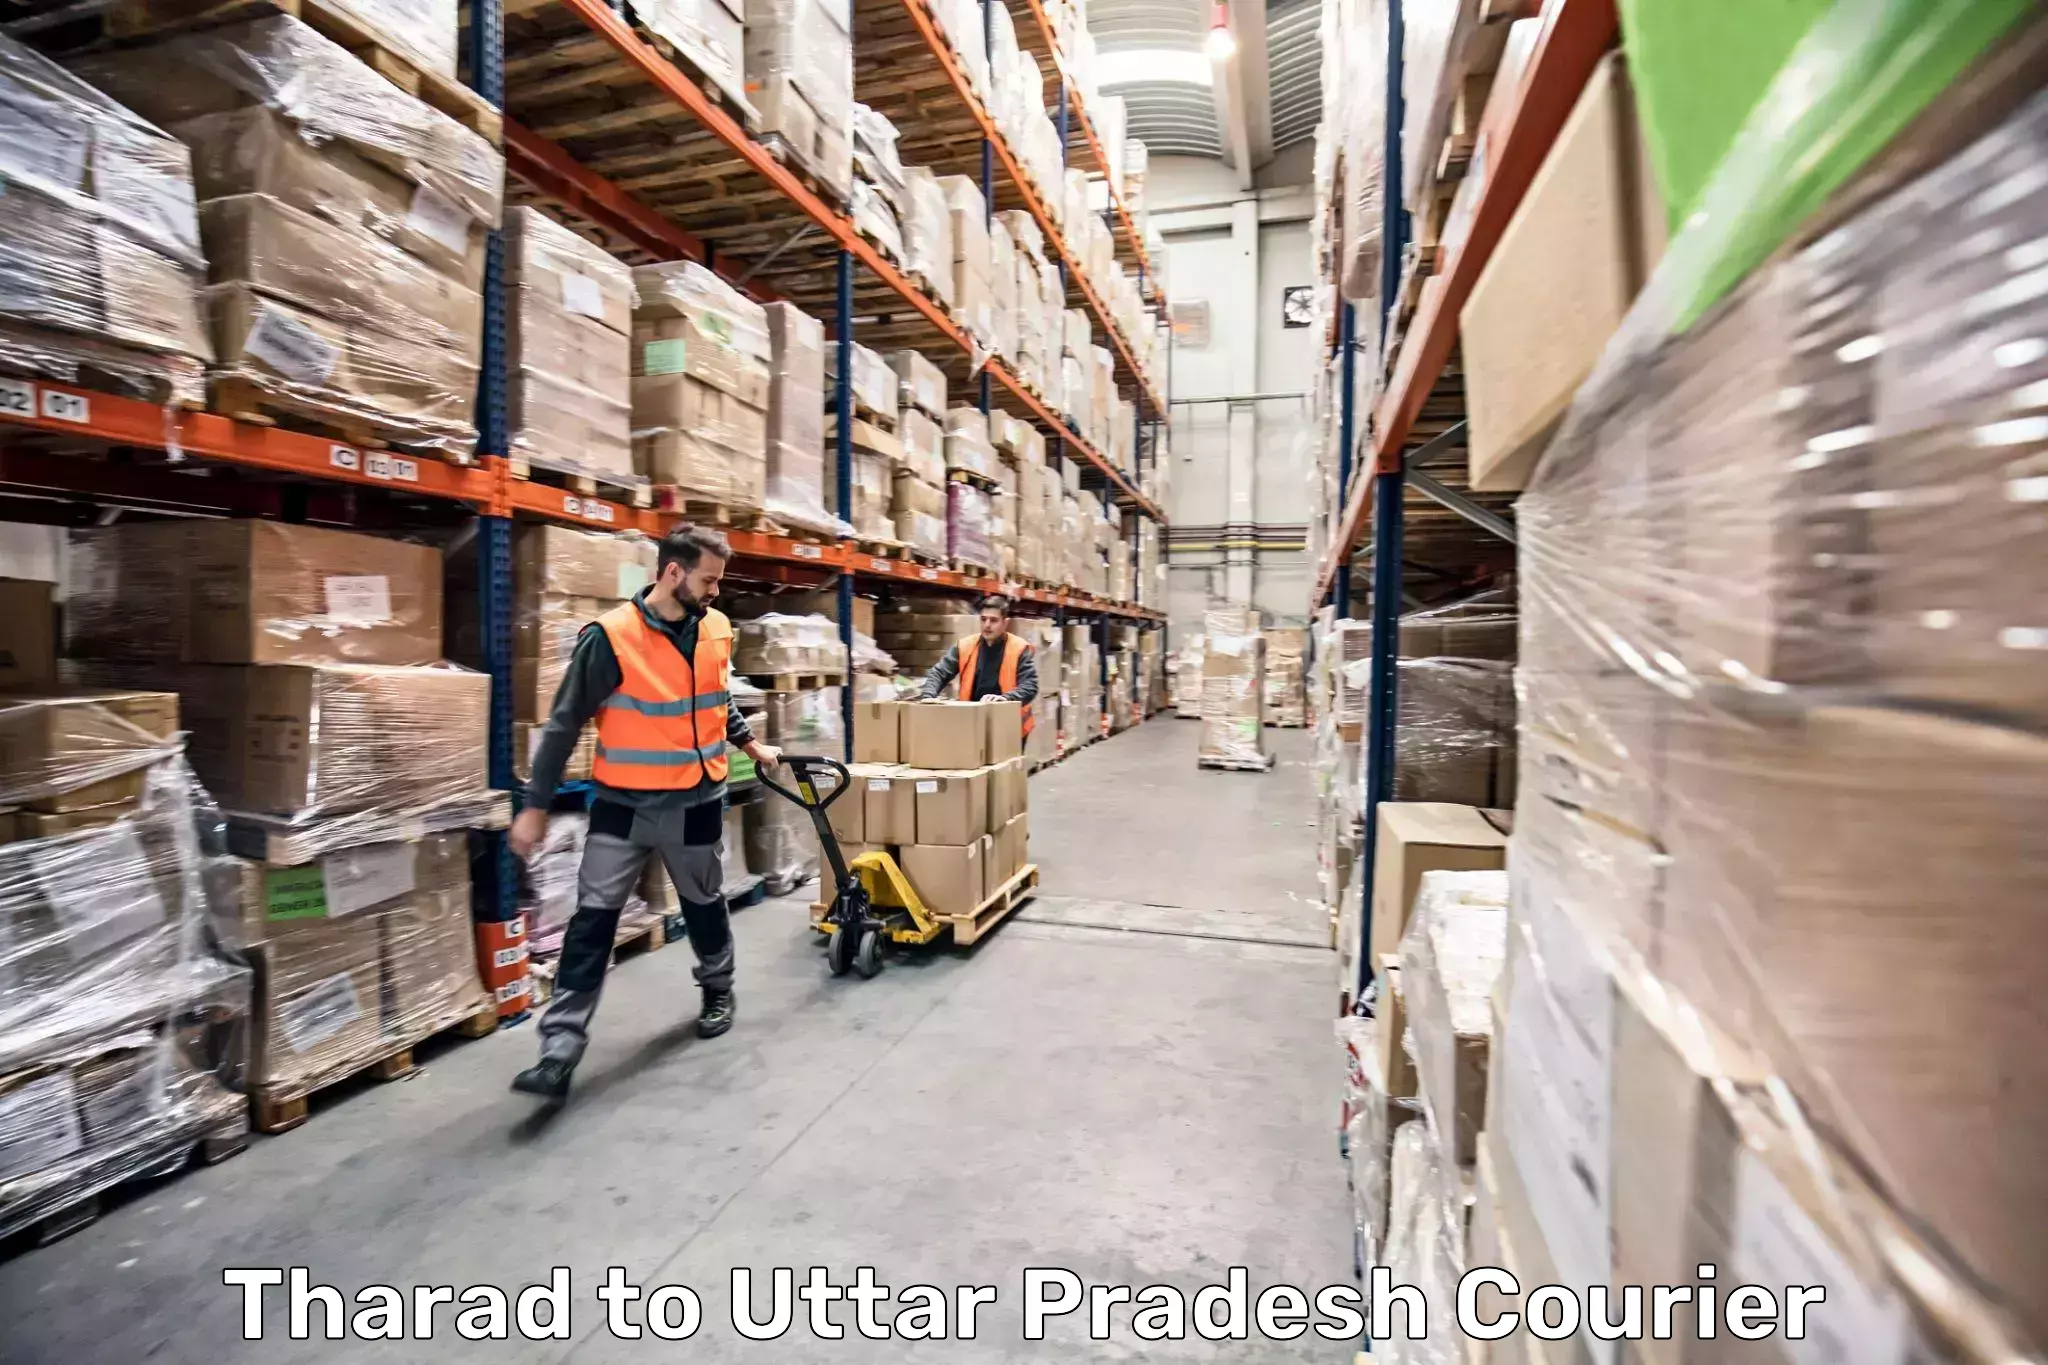 Luggage shipment specialists Tharad to Uttar Pradesh